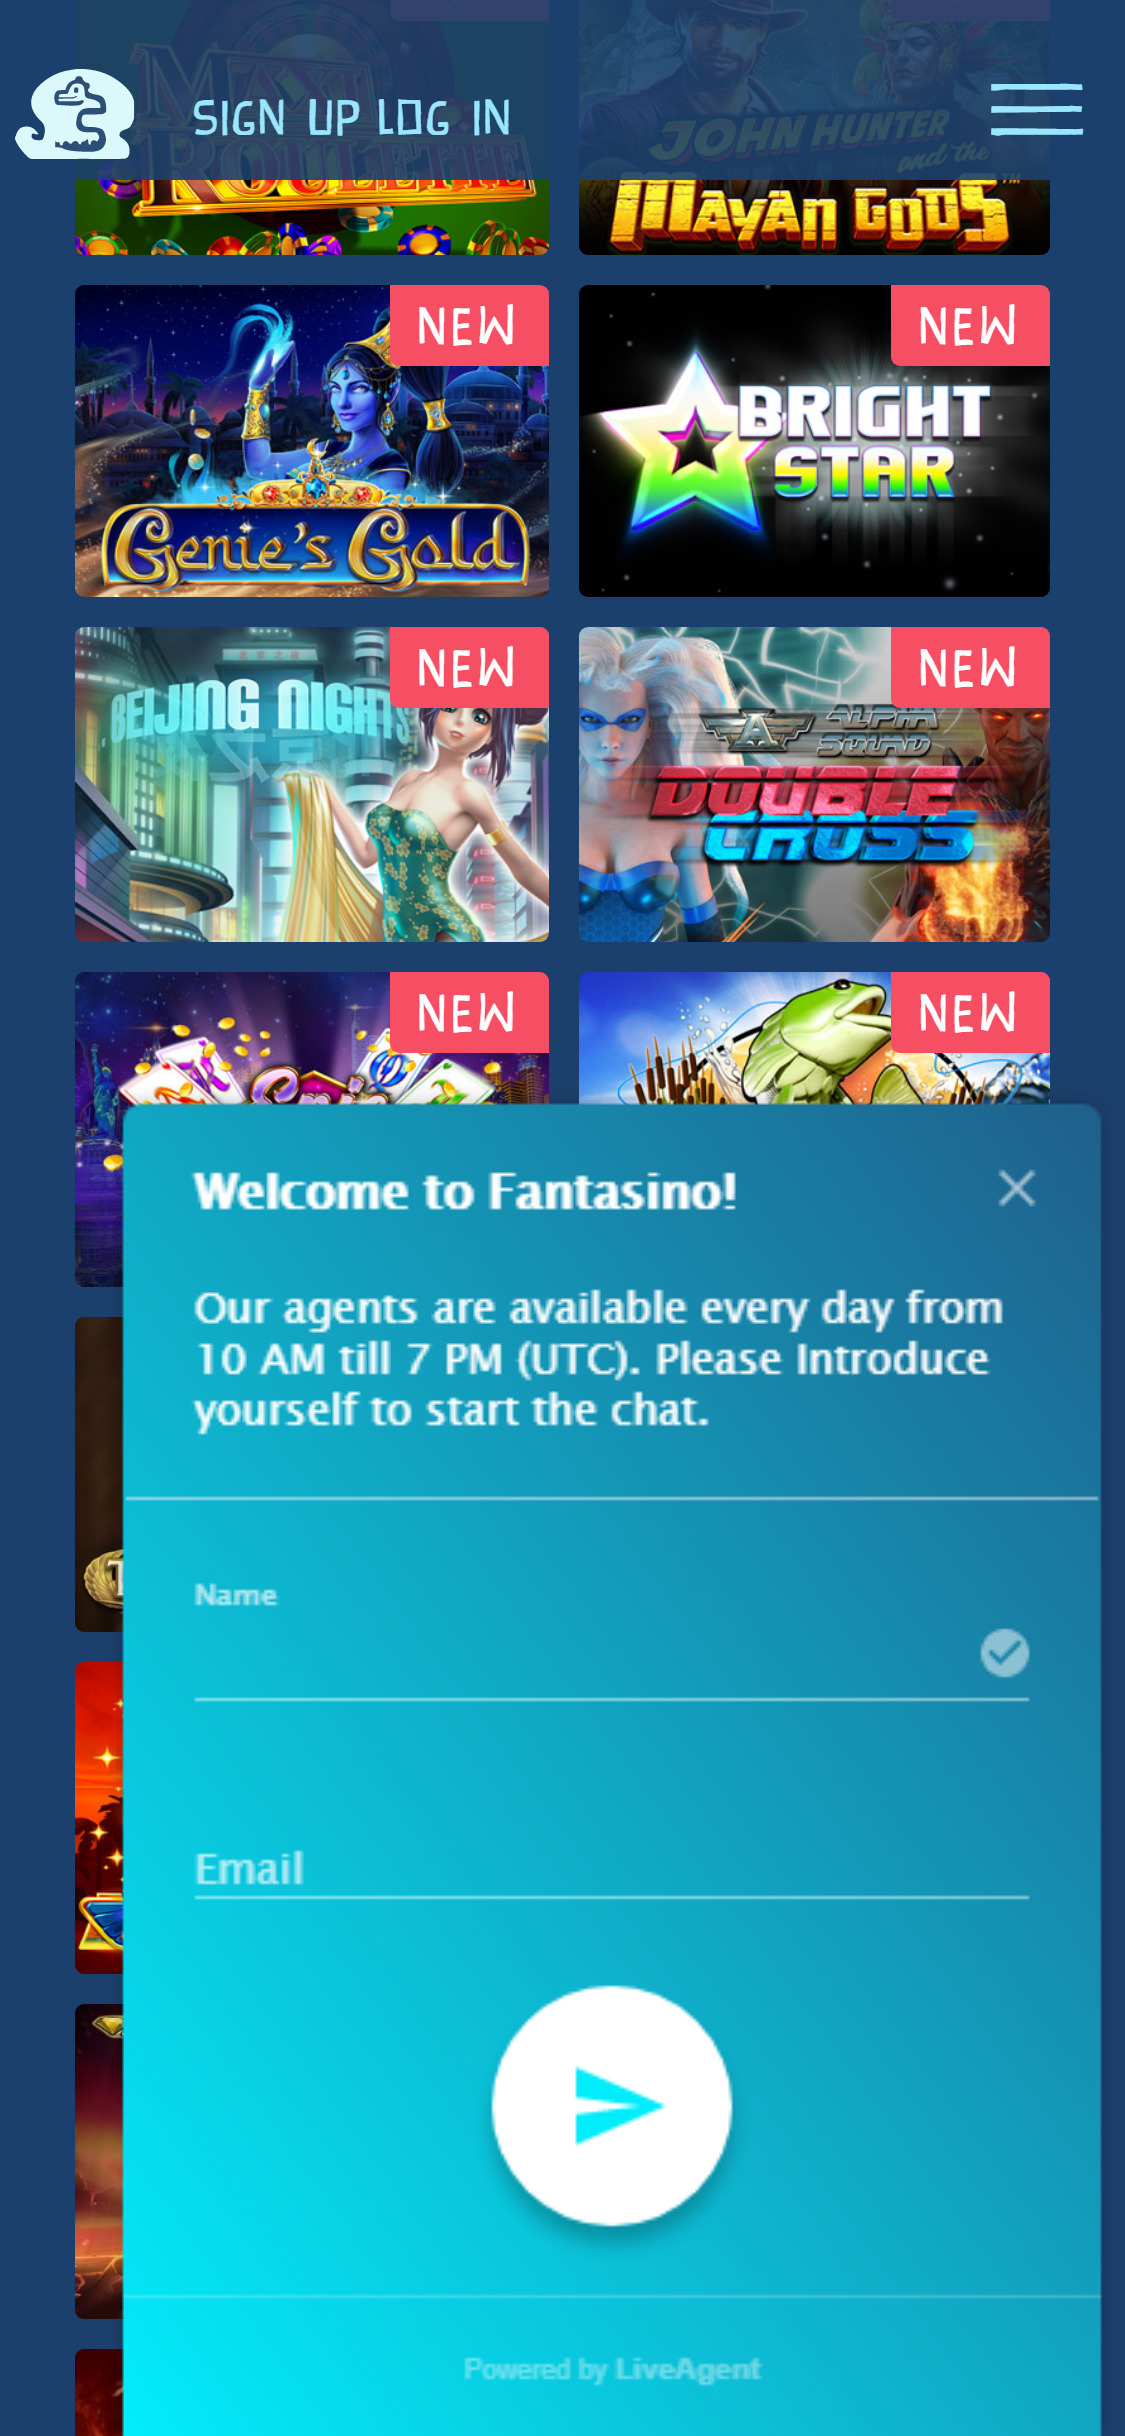 Fantasino Casino Mobile Support Review